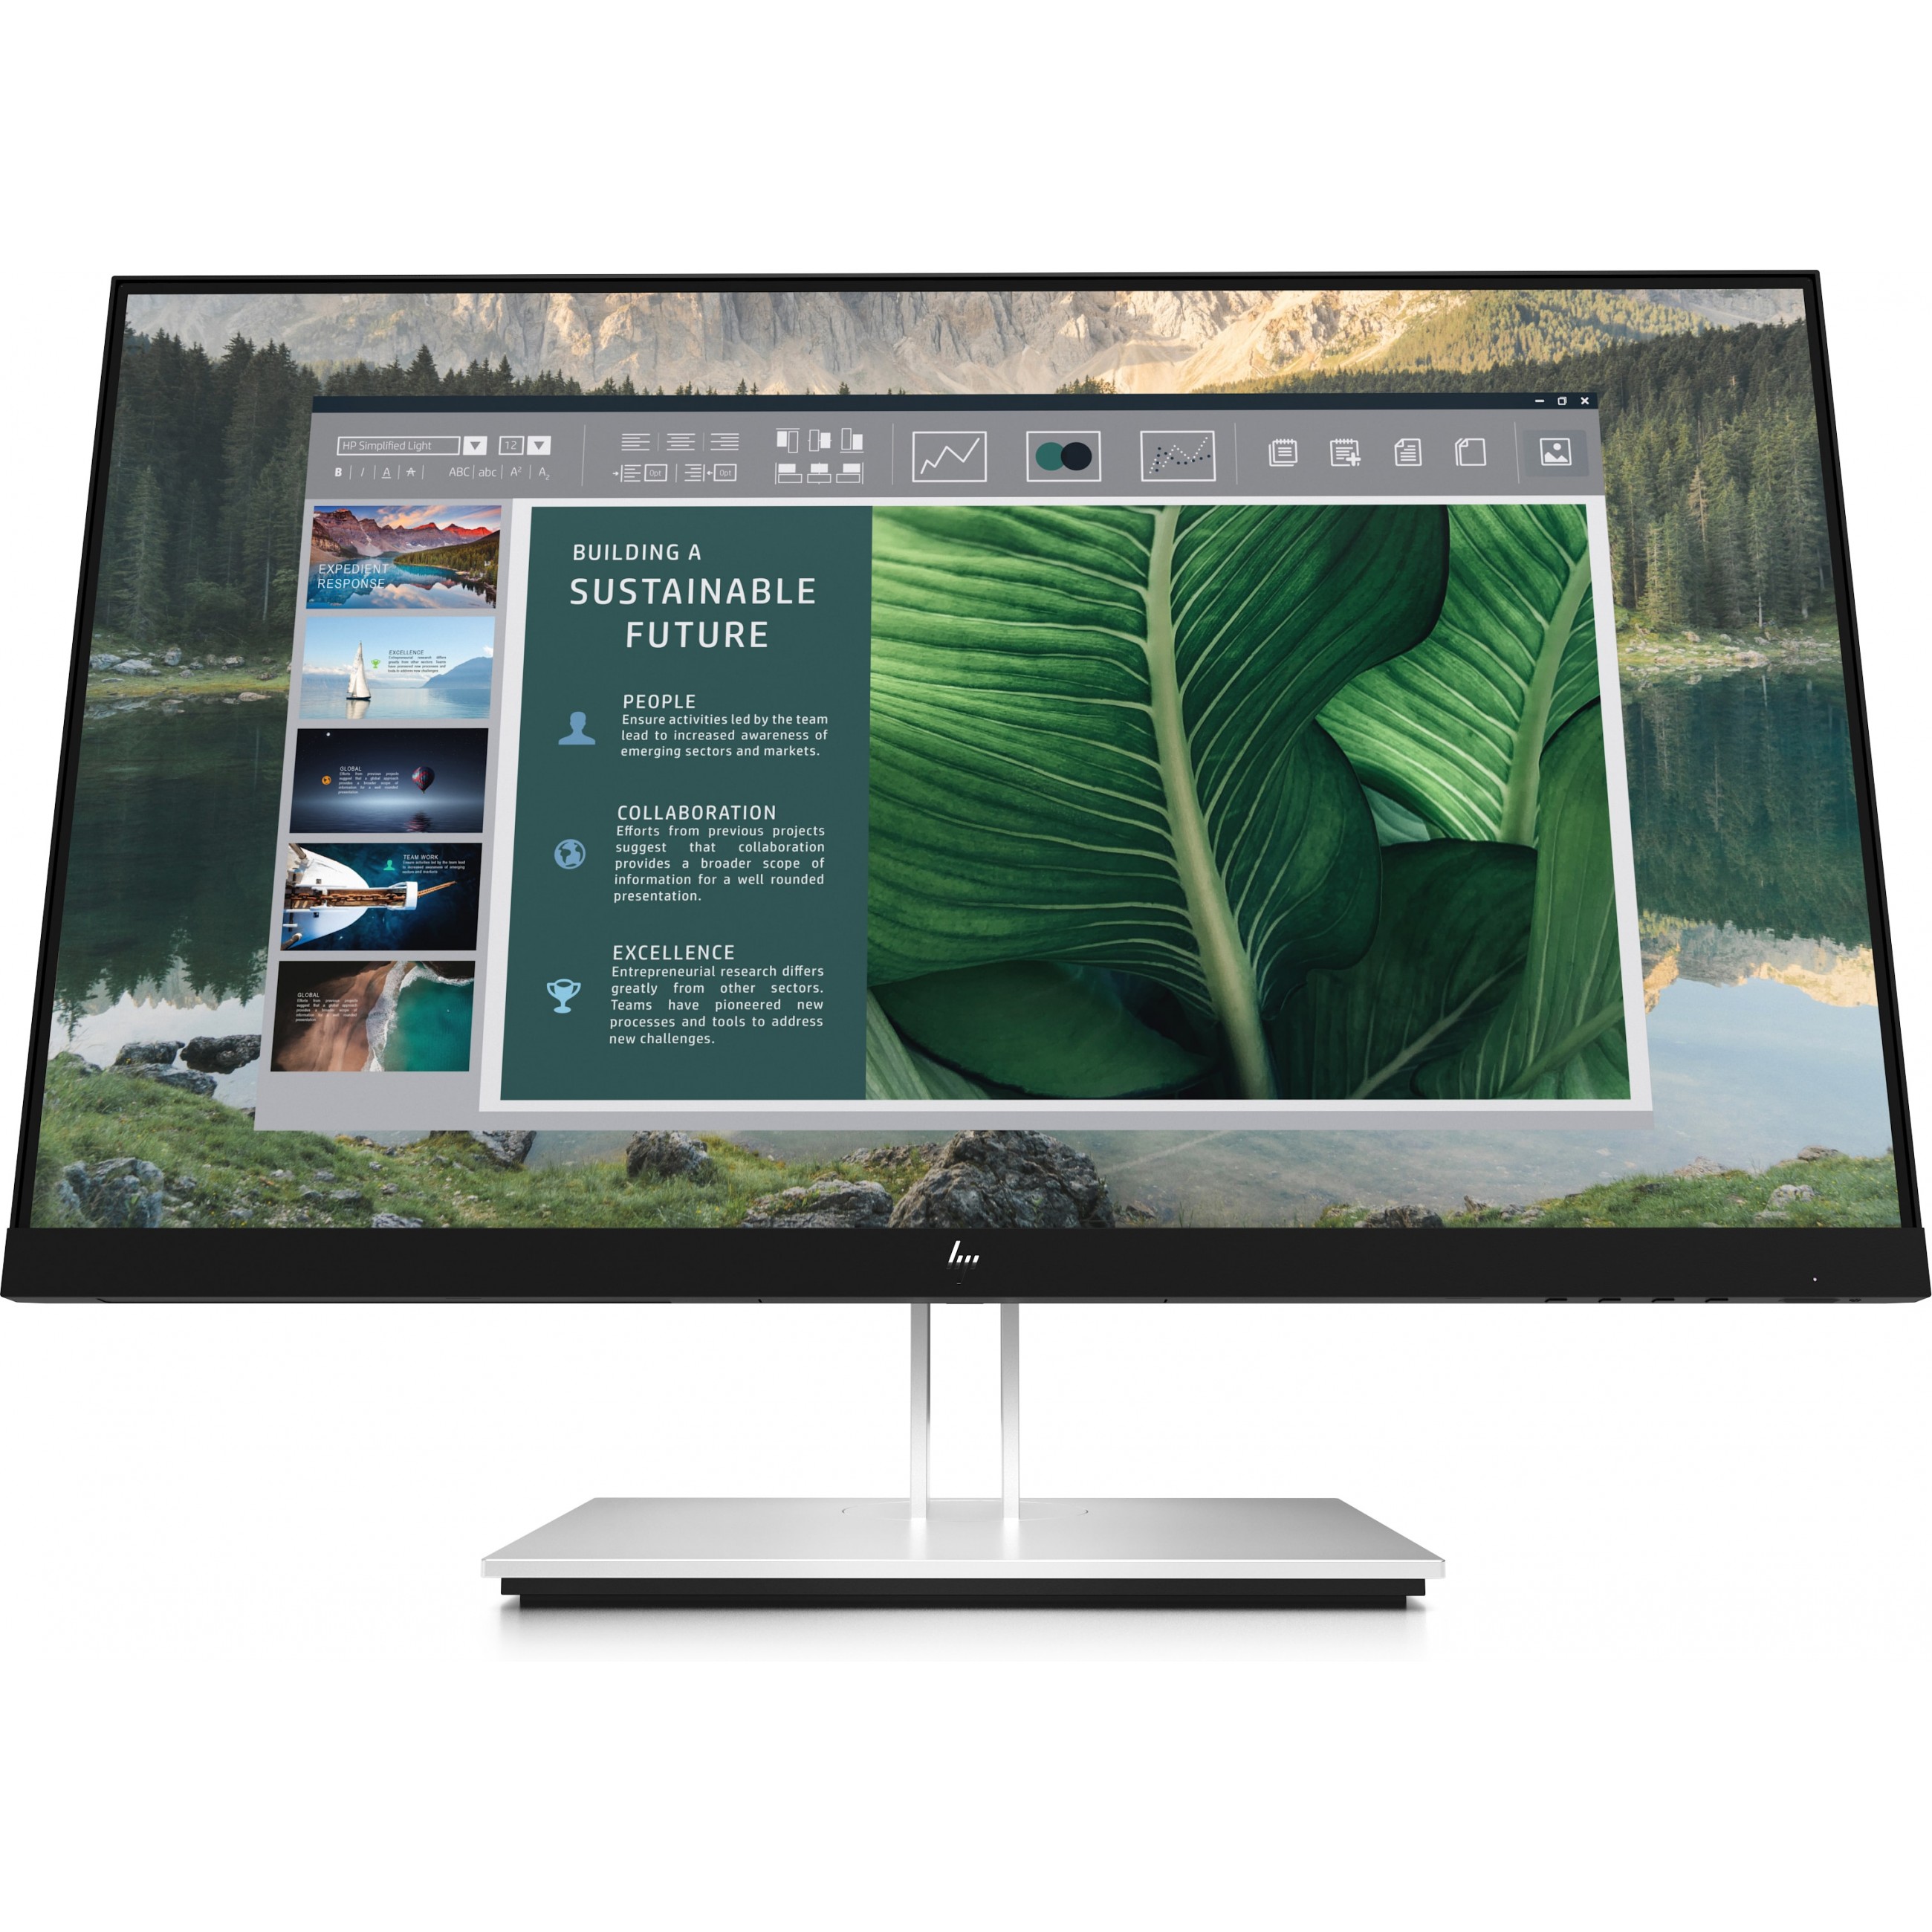 HP E24u G4 computer monitor - 189T0AA#ABB